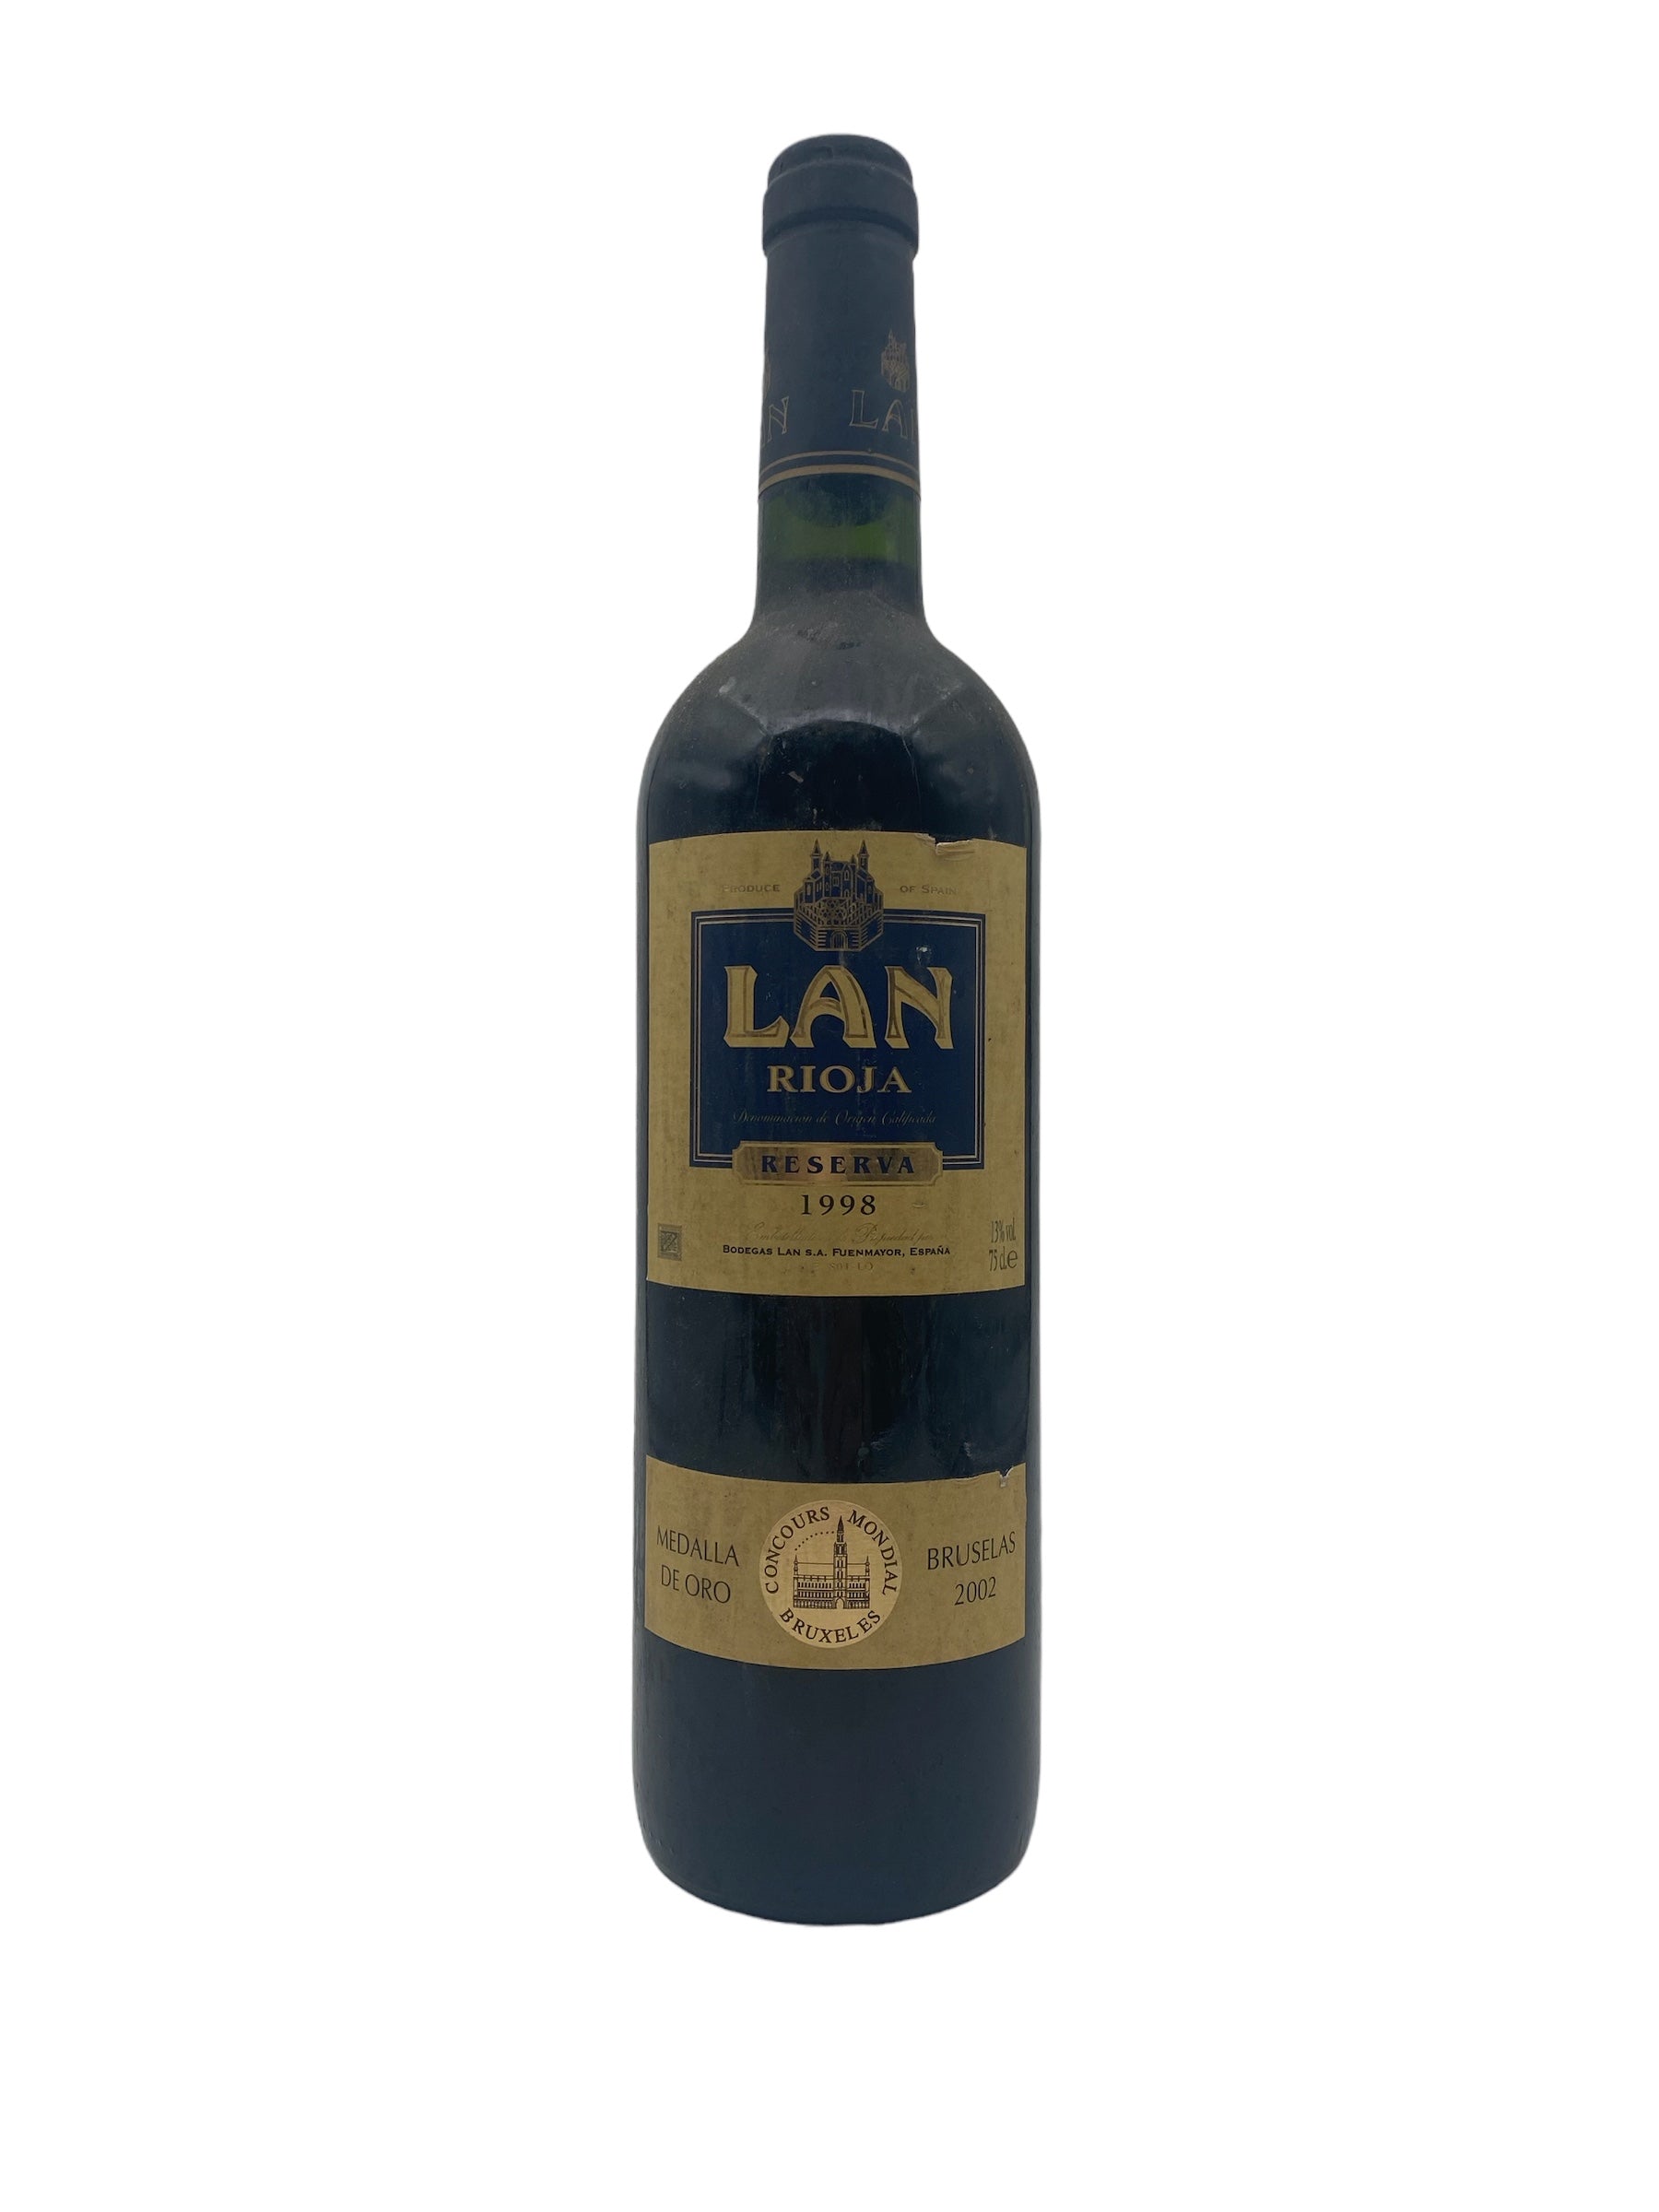 Se Rioja Lan 1998 hos Bottleswithhistory.dk